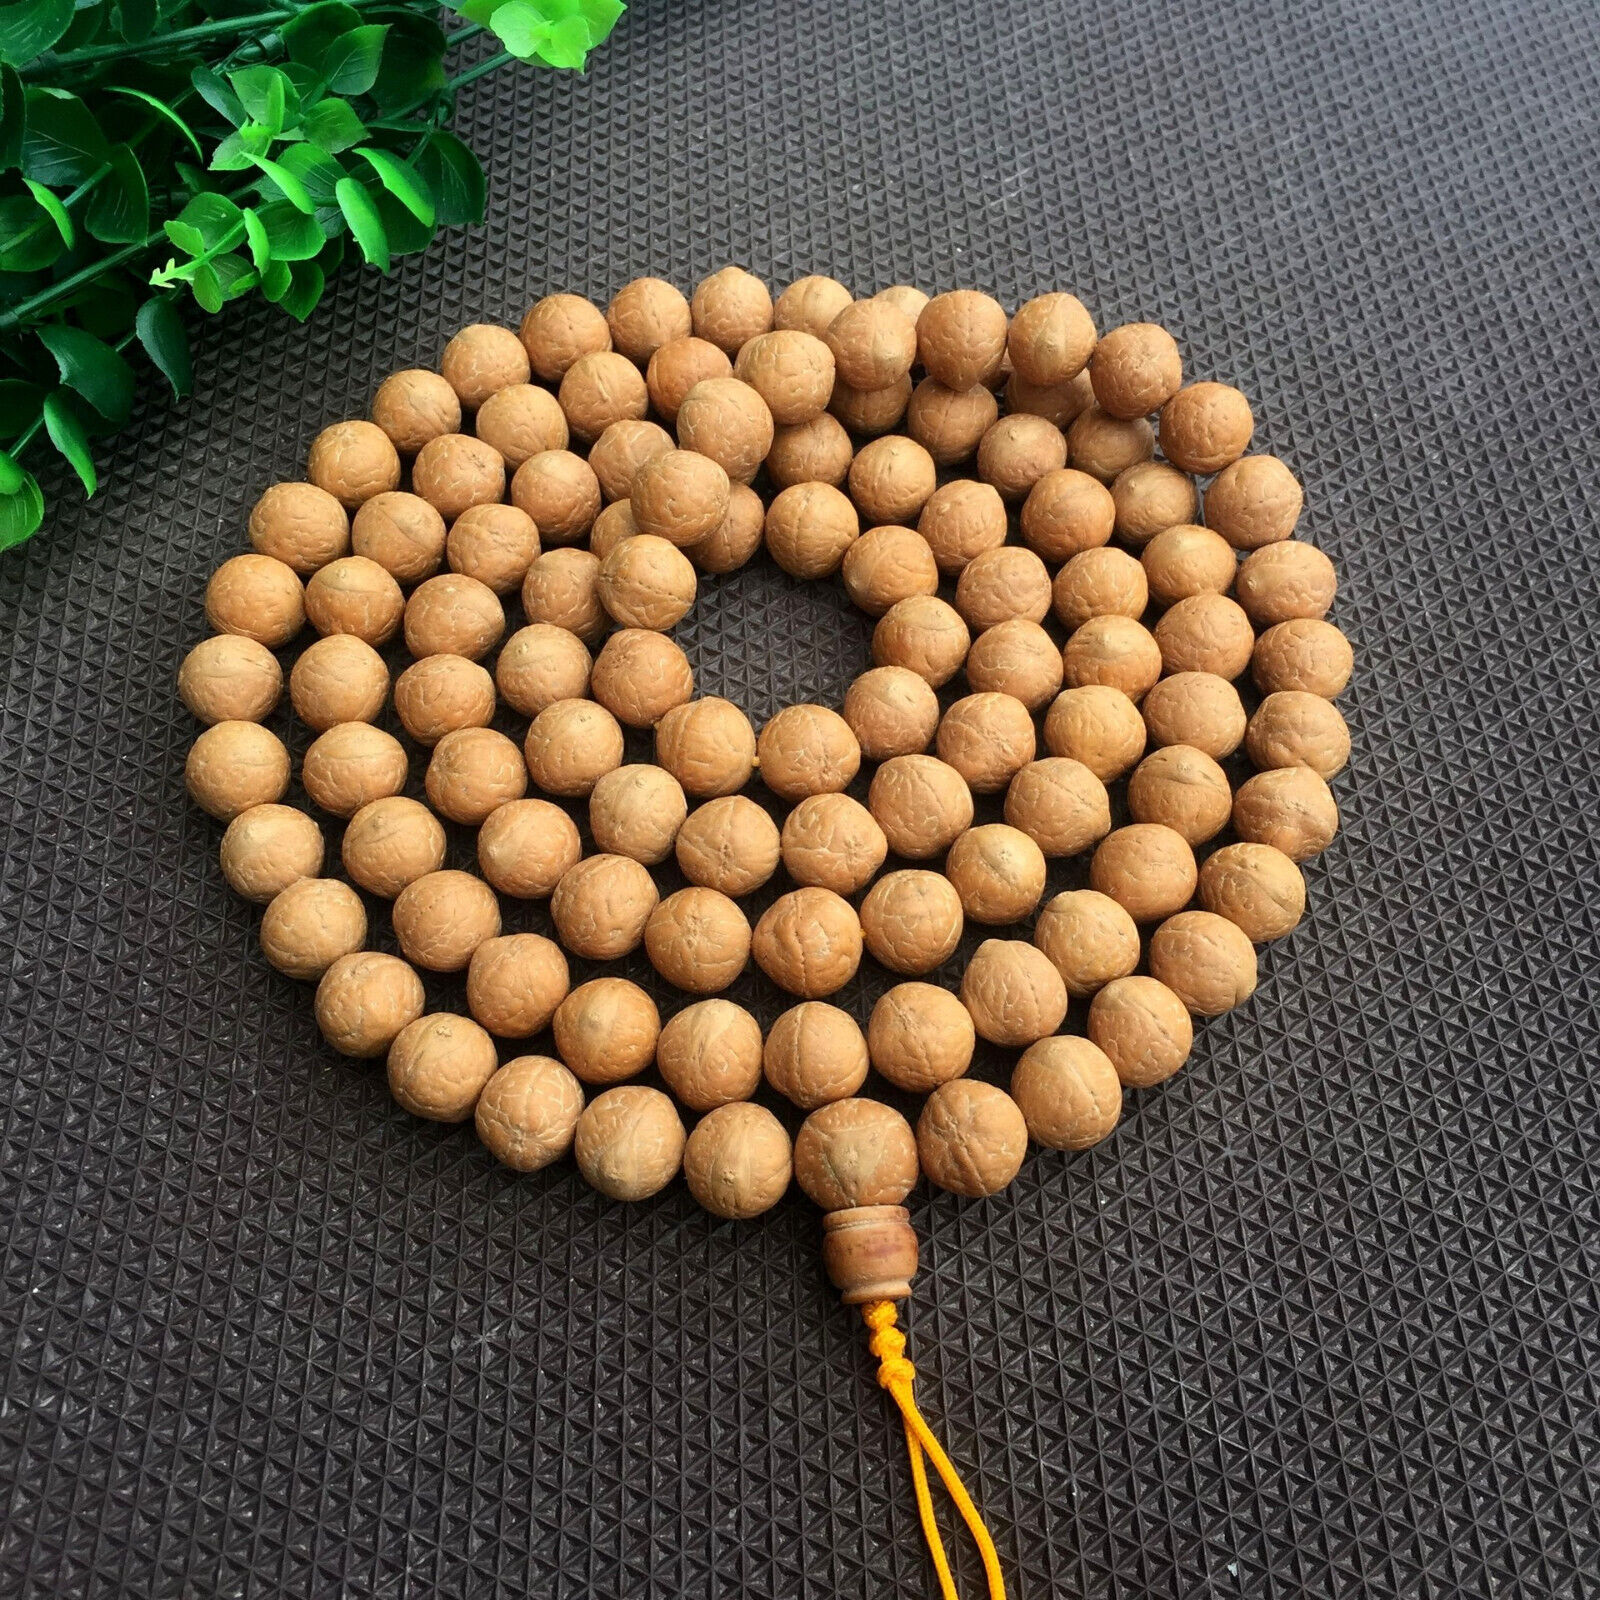 108 Original 14mm Tibet Buddhism Phoenix Eyes Bodhi Prayer Beads Mala Necklace